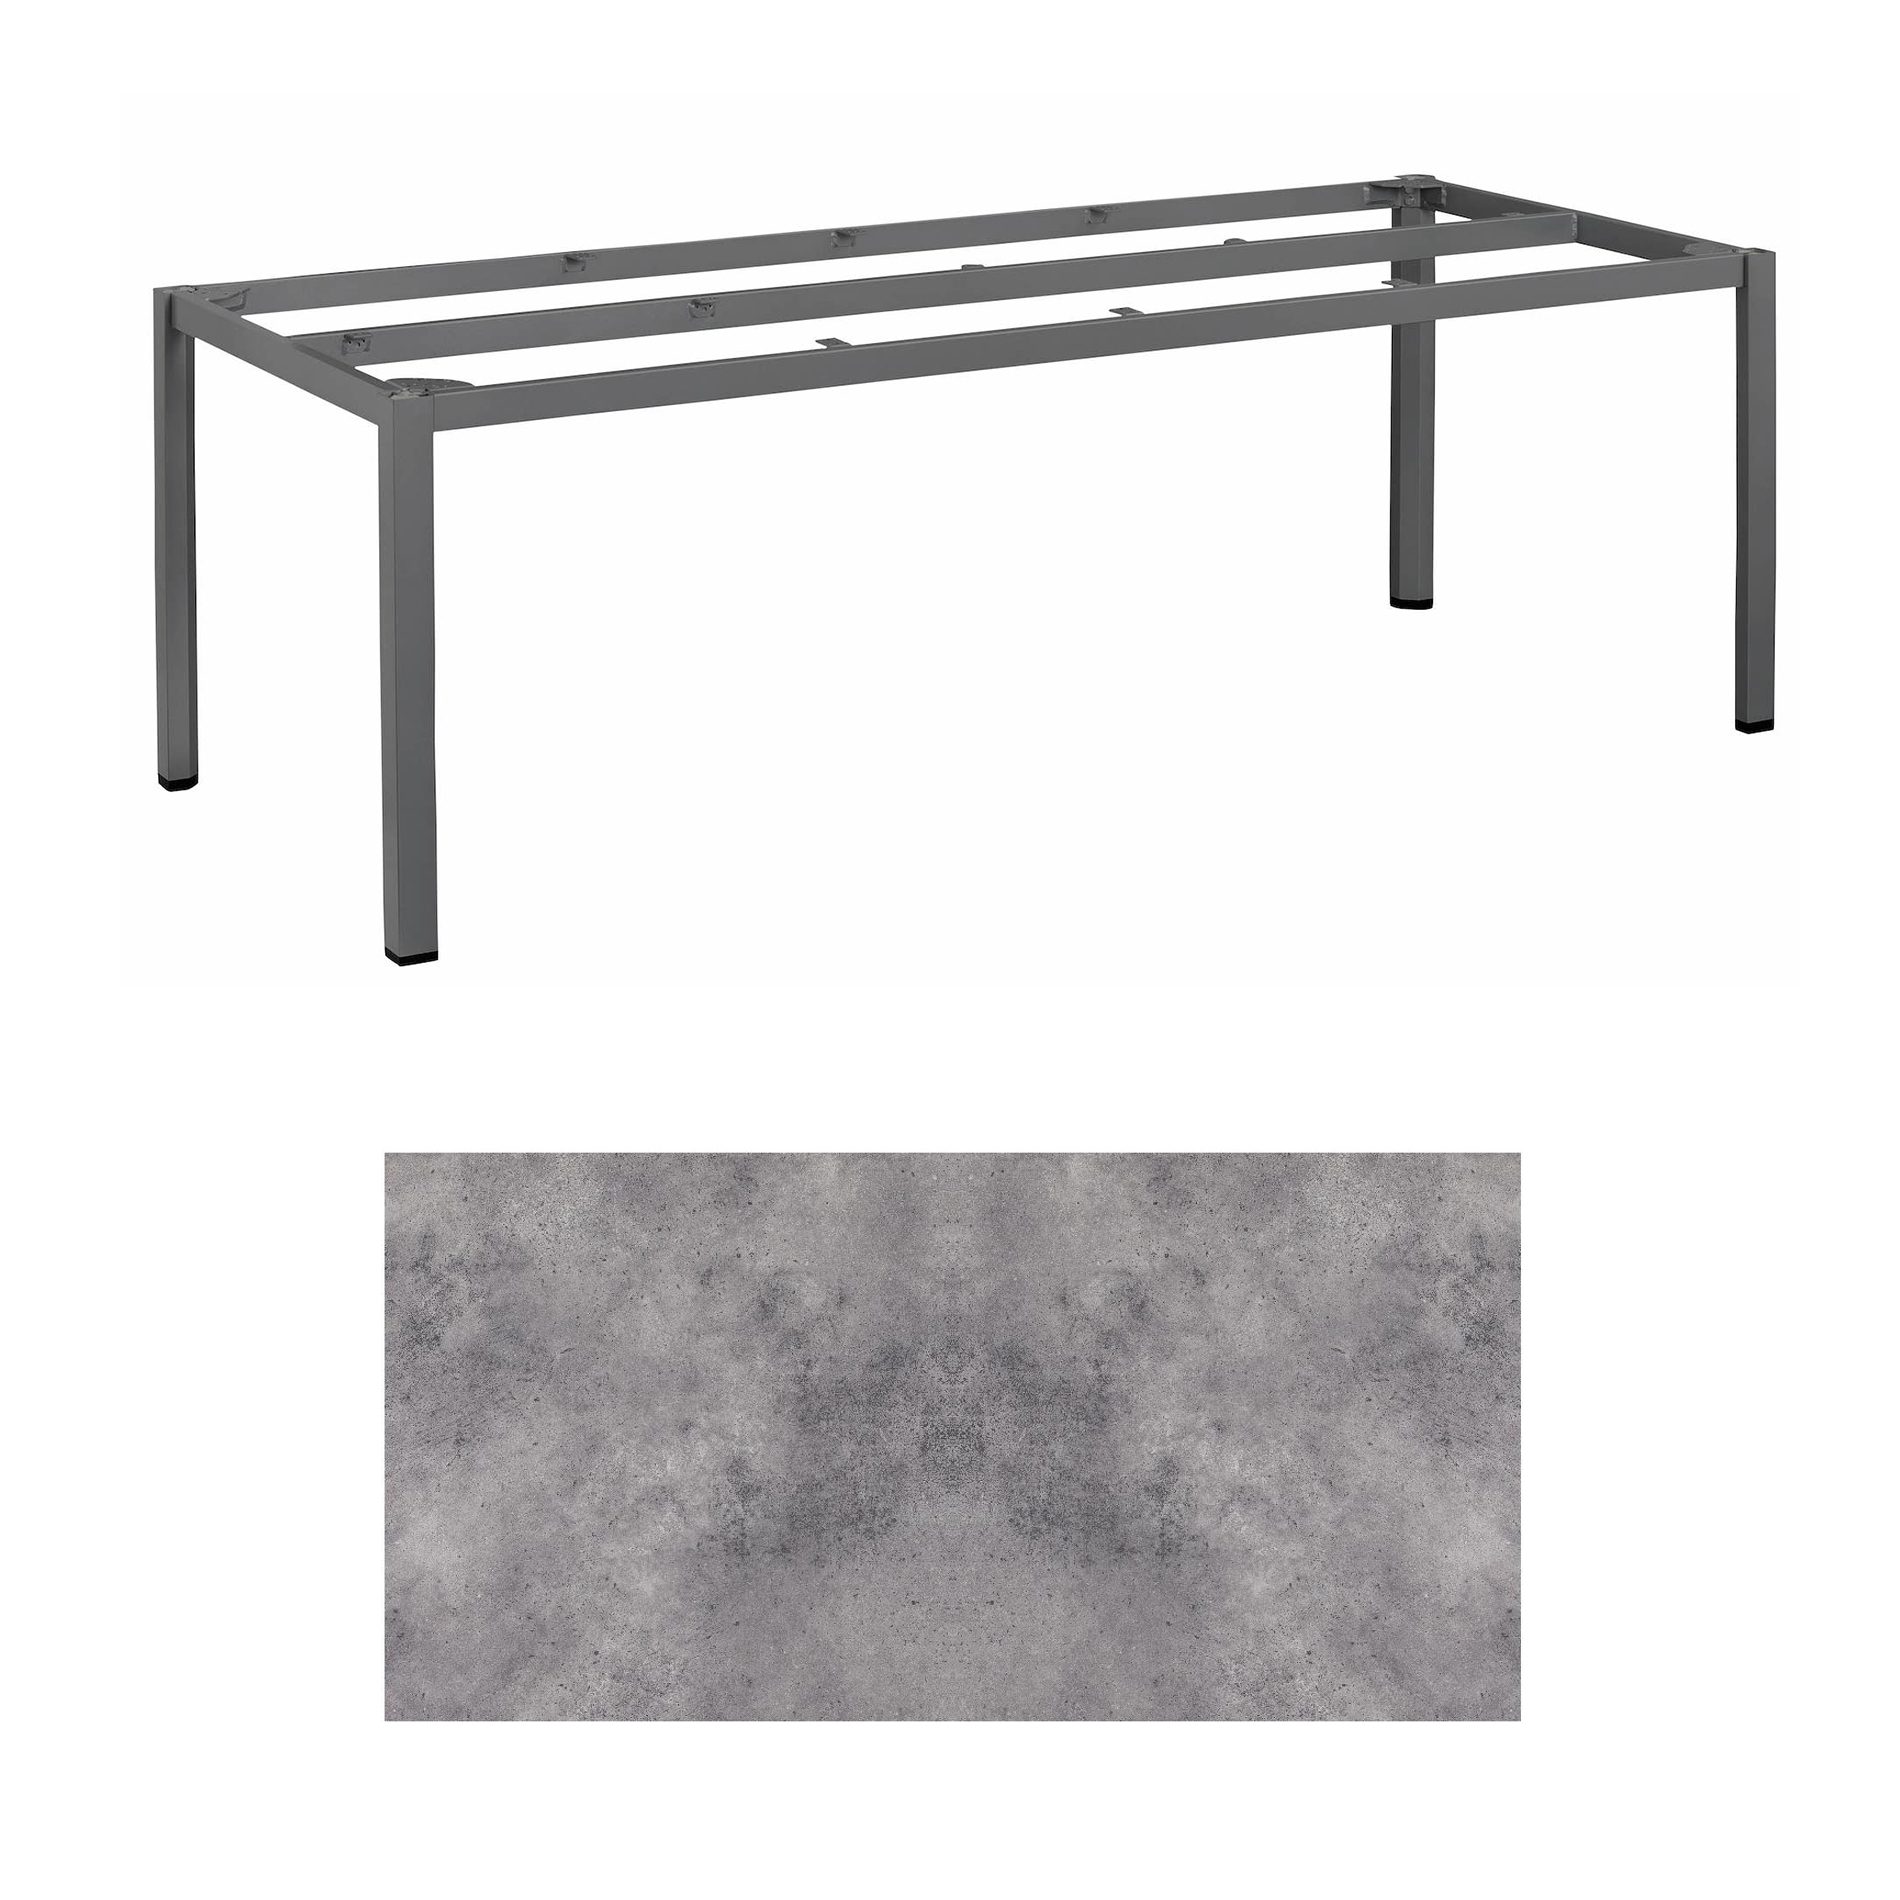 Kettler "Cubic" Tischgestell 220x95 cm, Aluminium anthrazit mit HPL-Platte anthrazit